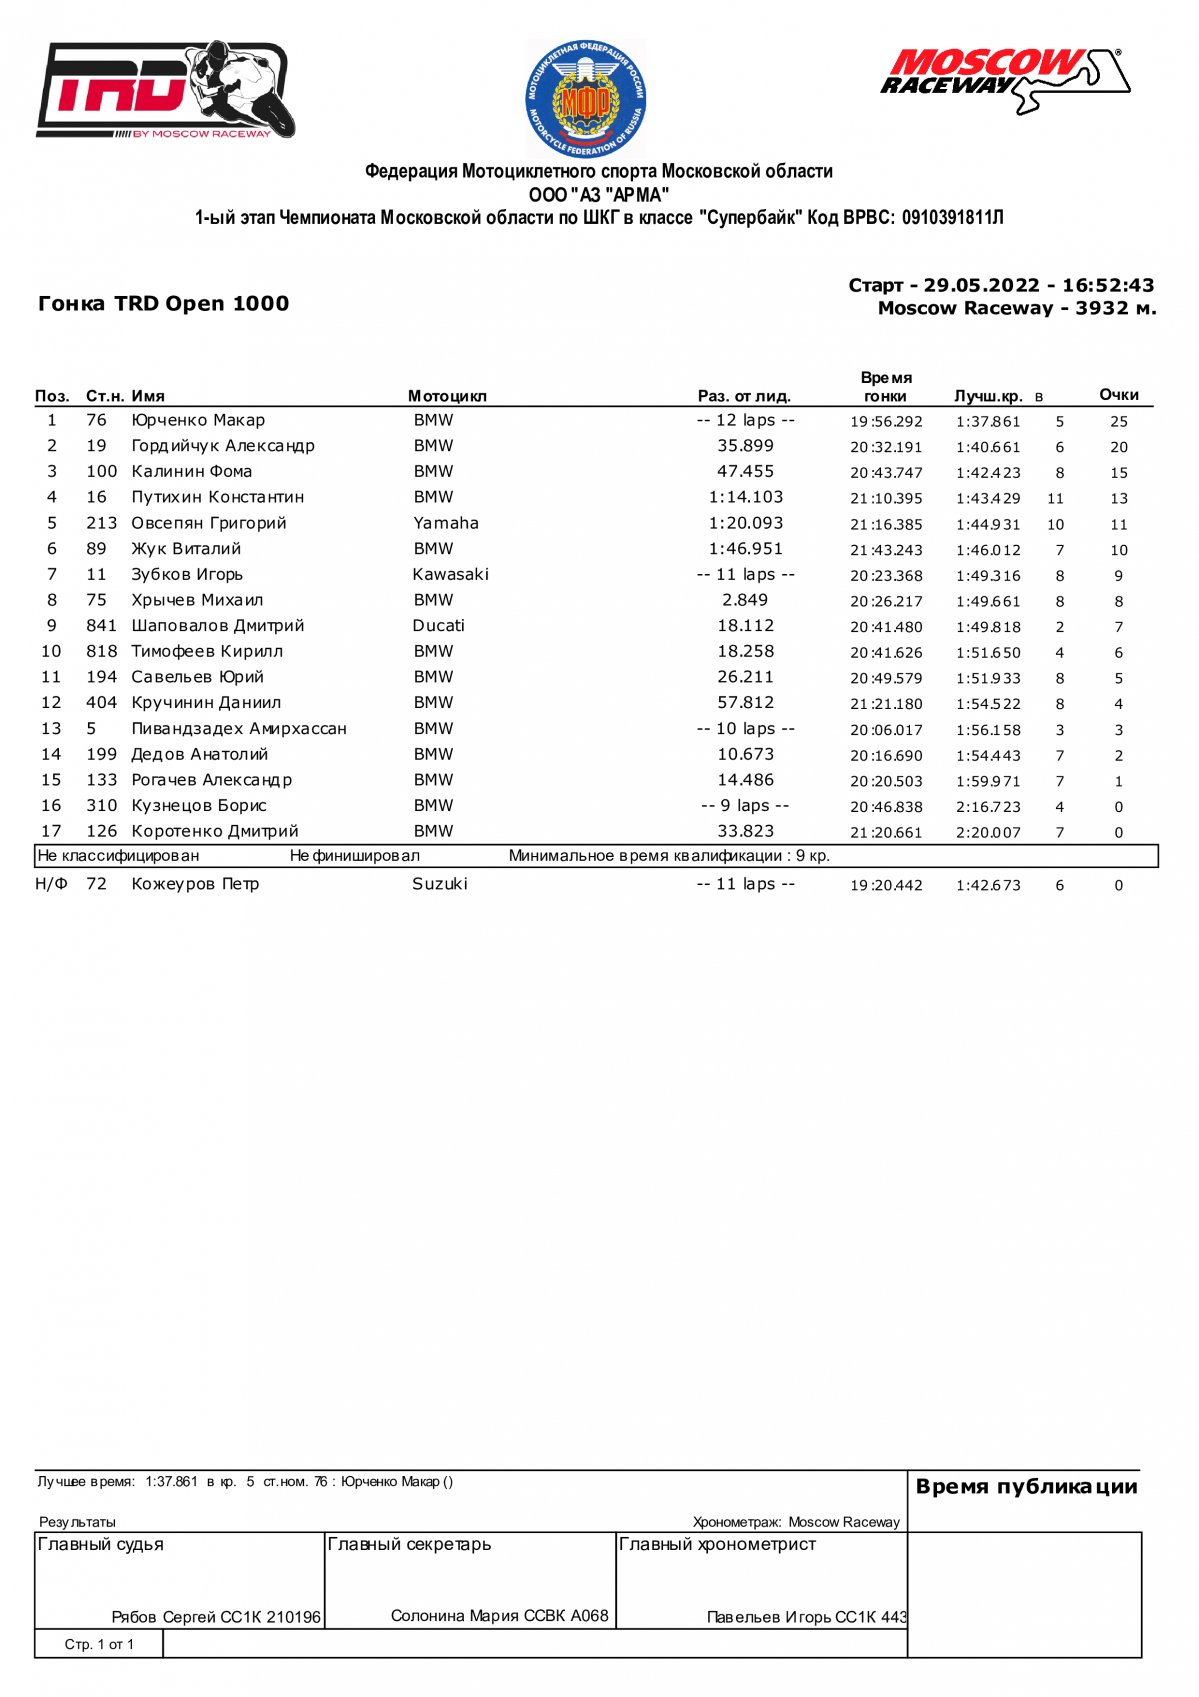 Результаты 1 этапа TRD Open 1000, Moscow Raceway (29/05/2022)